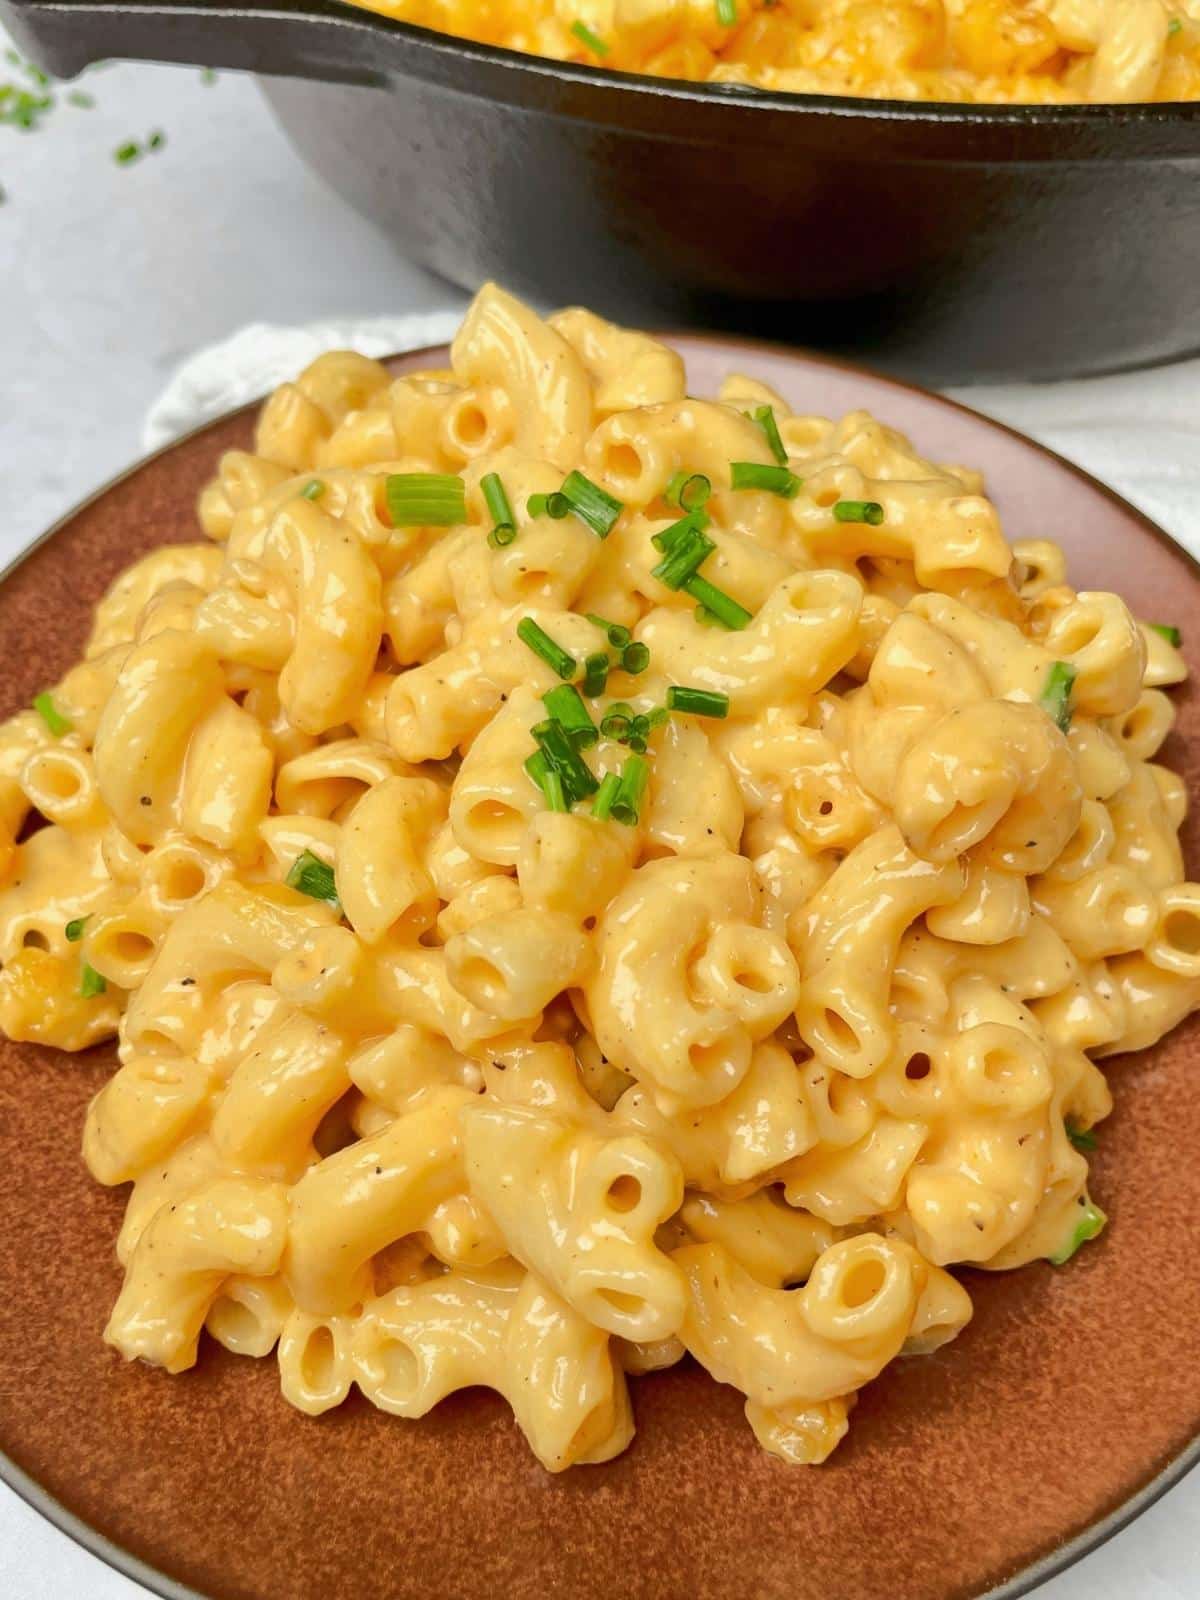 Plate of vegan macaroni and cheese.